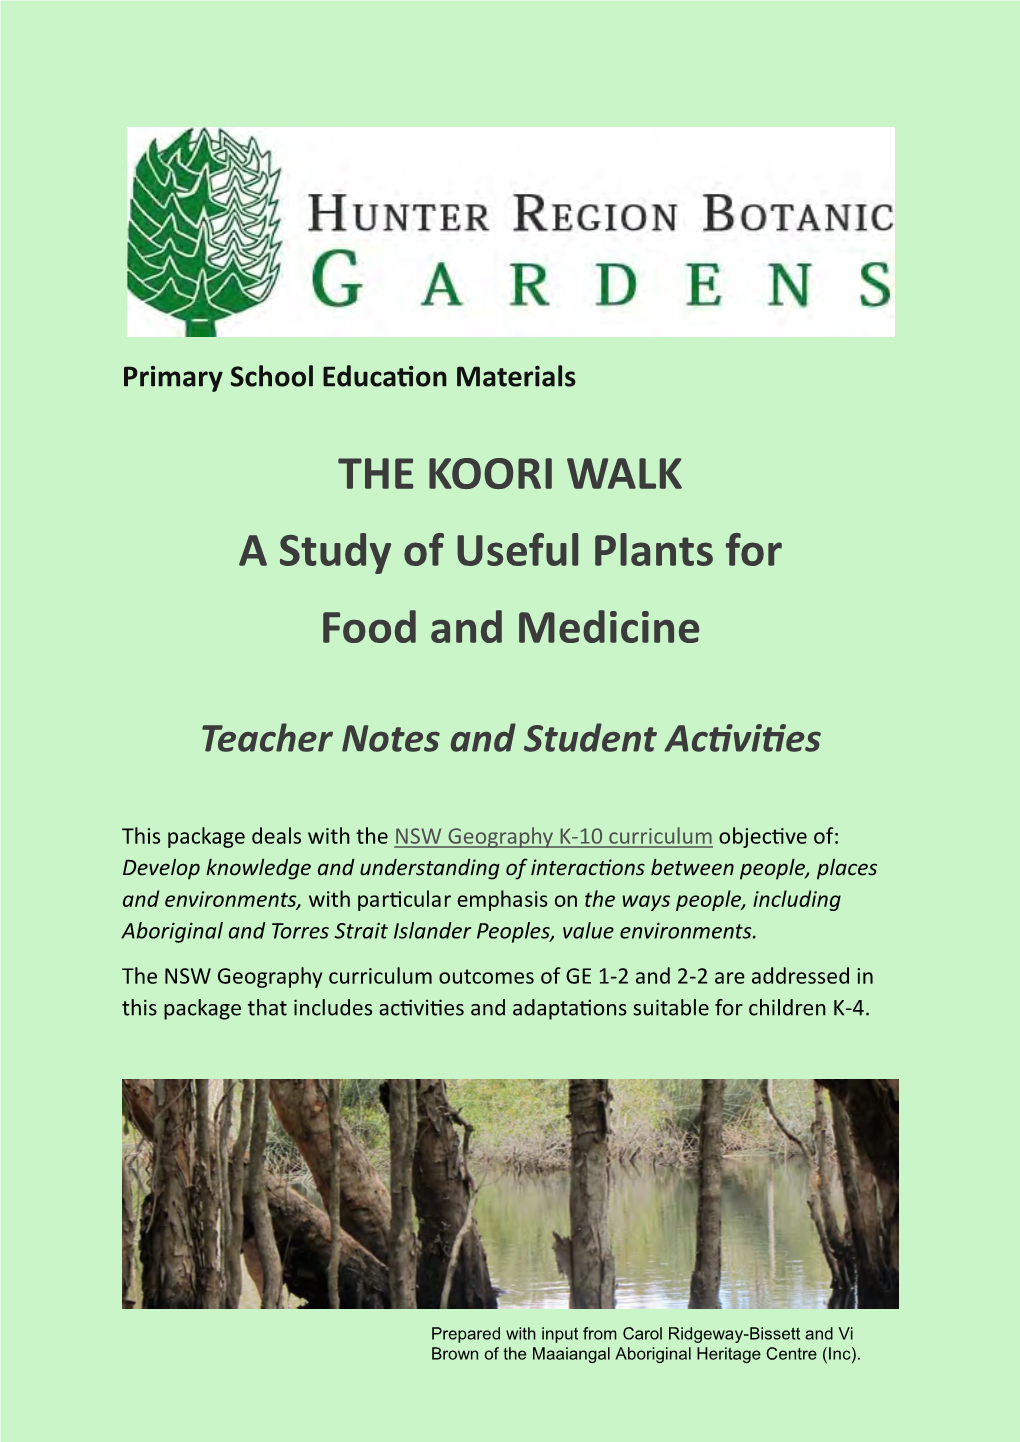 THE KOORI WALK a Study of Useful Plants for Food and Medicine